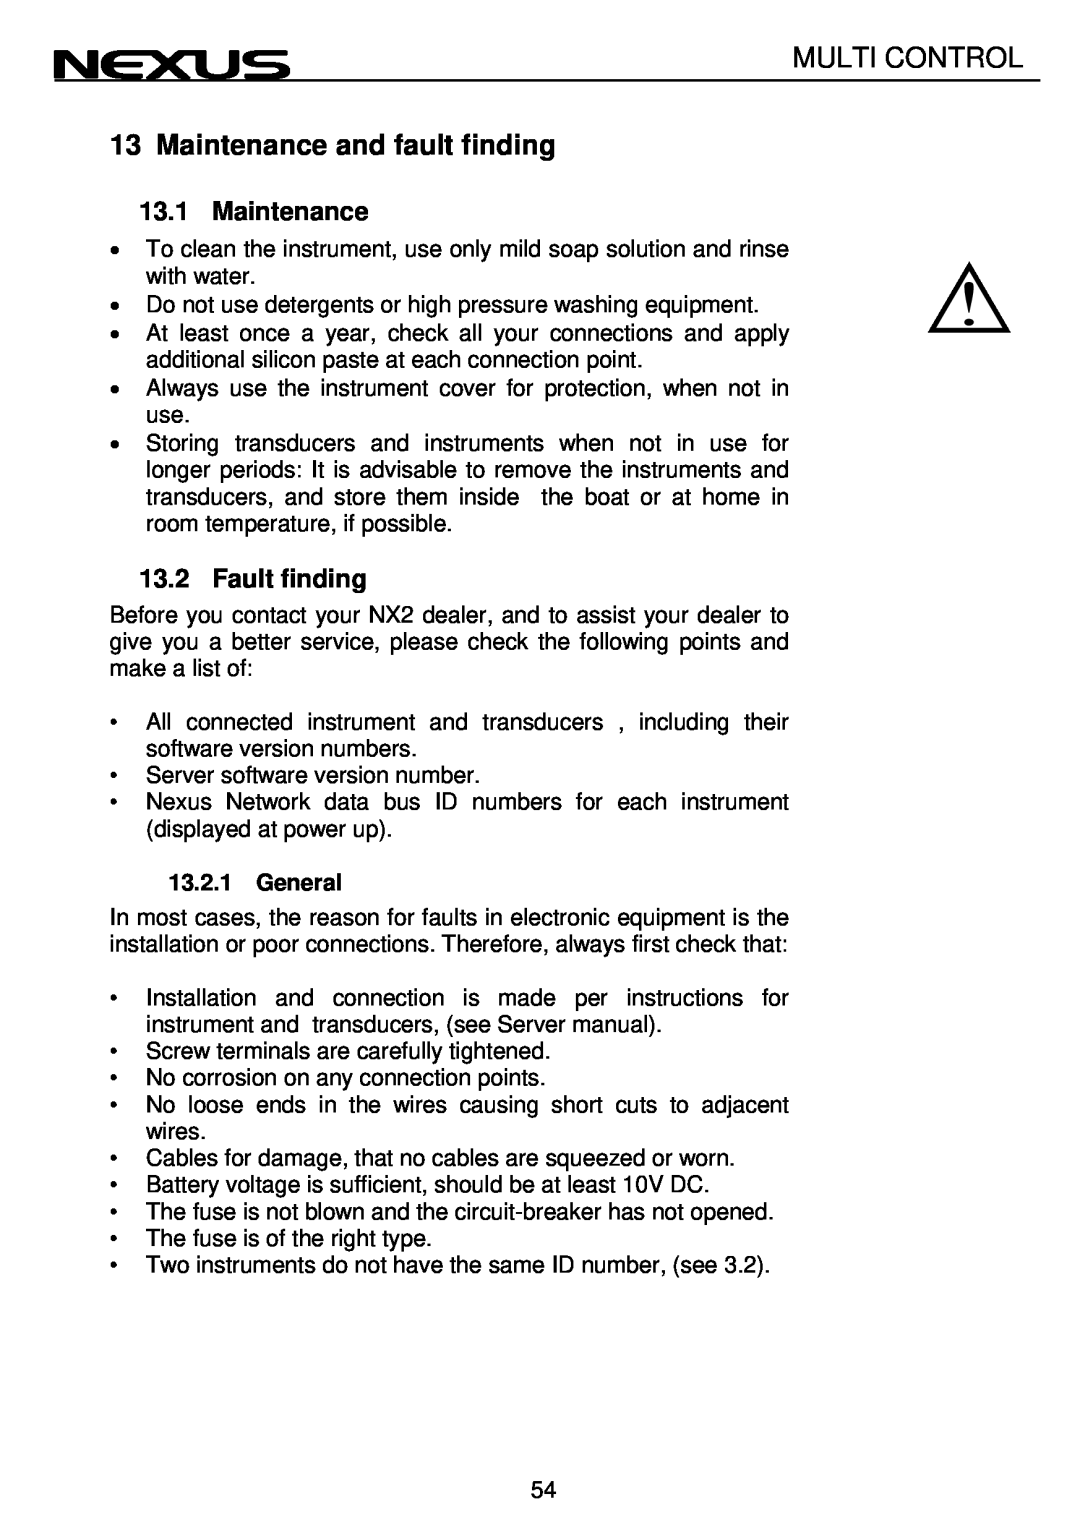 Nexus 21 Multi Control operation manual 13Maintenance and fault finding, 13.1Maintenance, Fault finding, 13.2.1General 